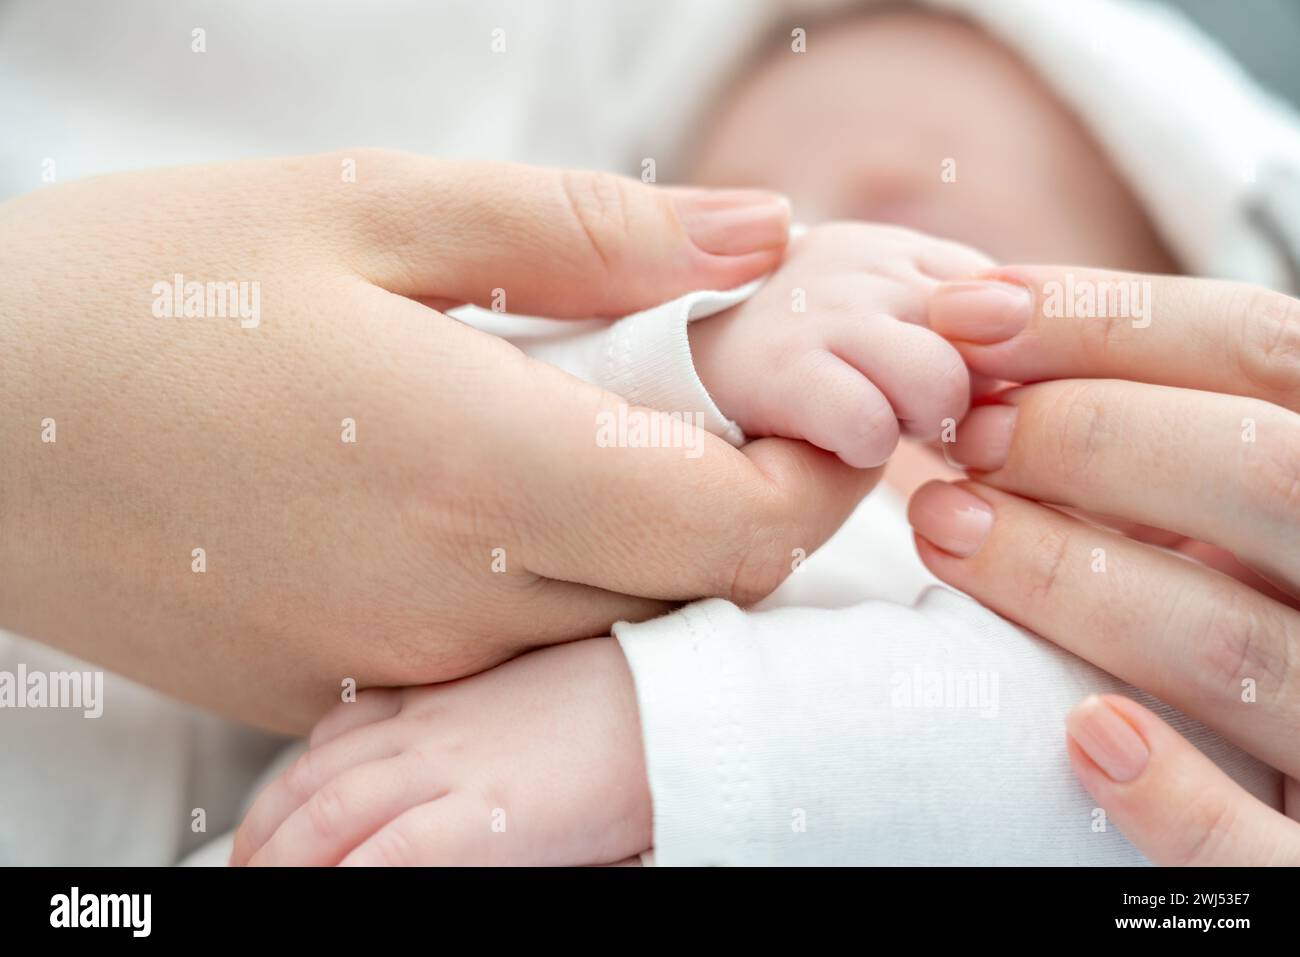 Mother's reassuring touch calms a sick newborn. Concept of the healing power of maternal bond Stock Photo